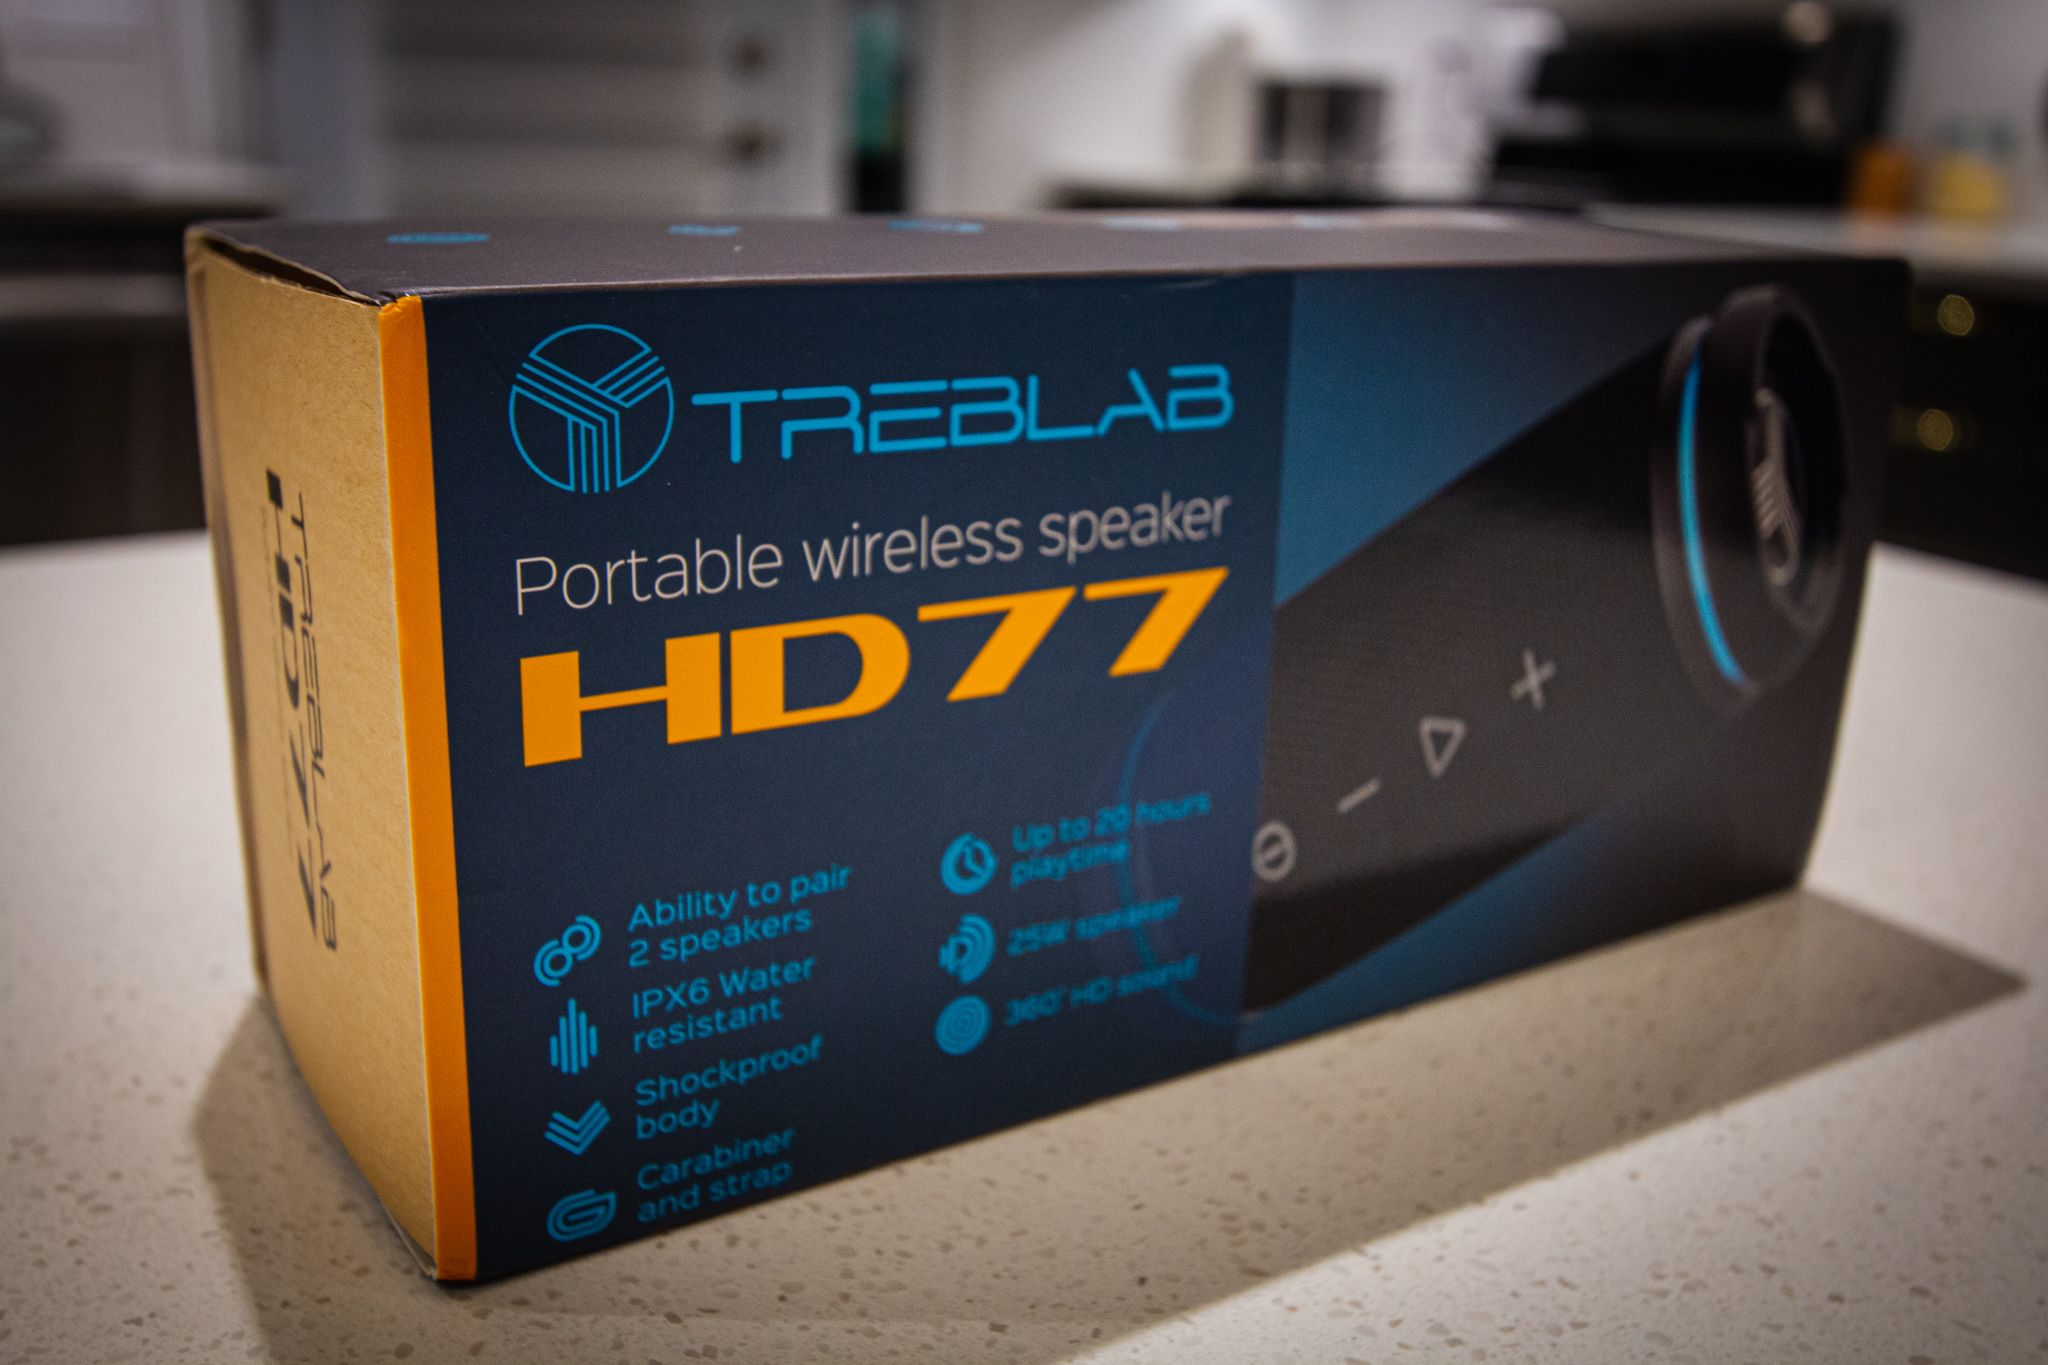 Treblab HD77 packaging